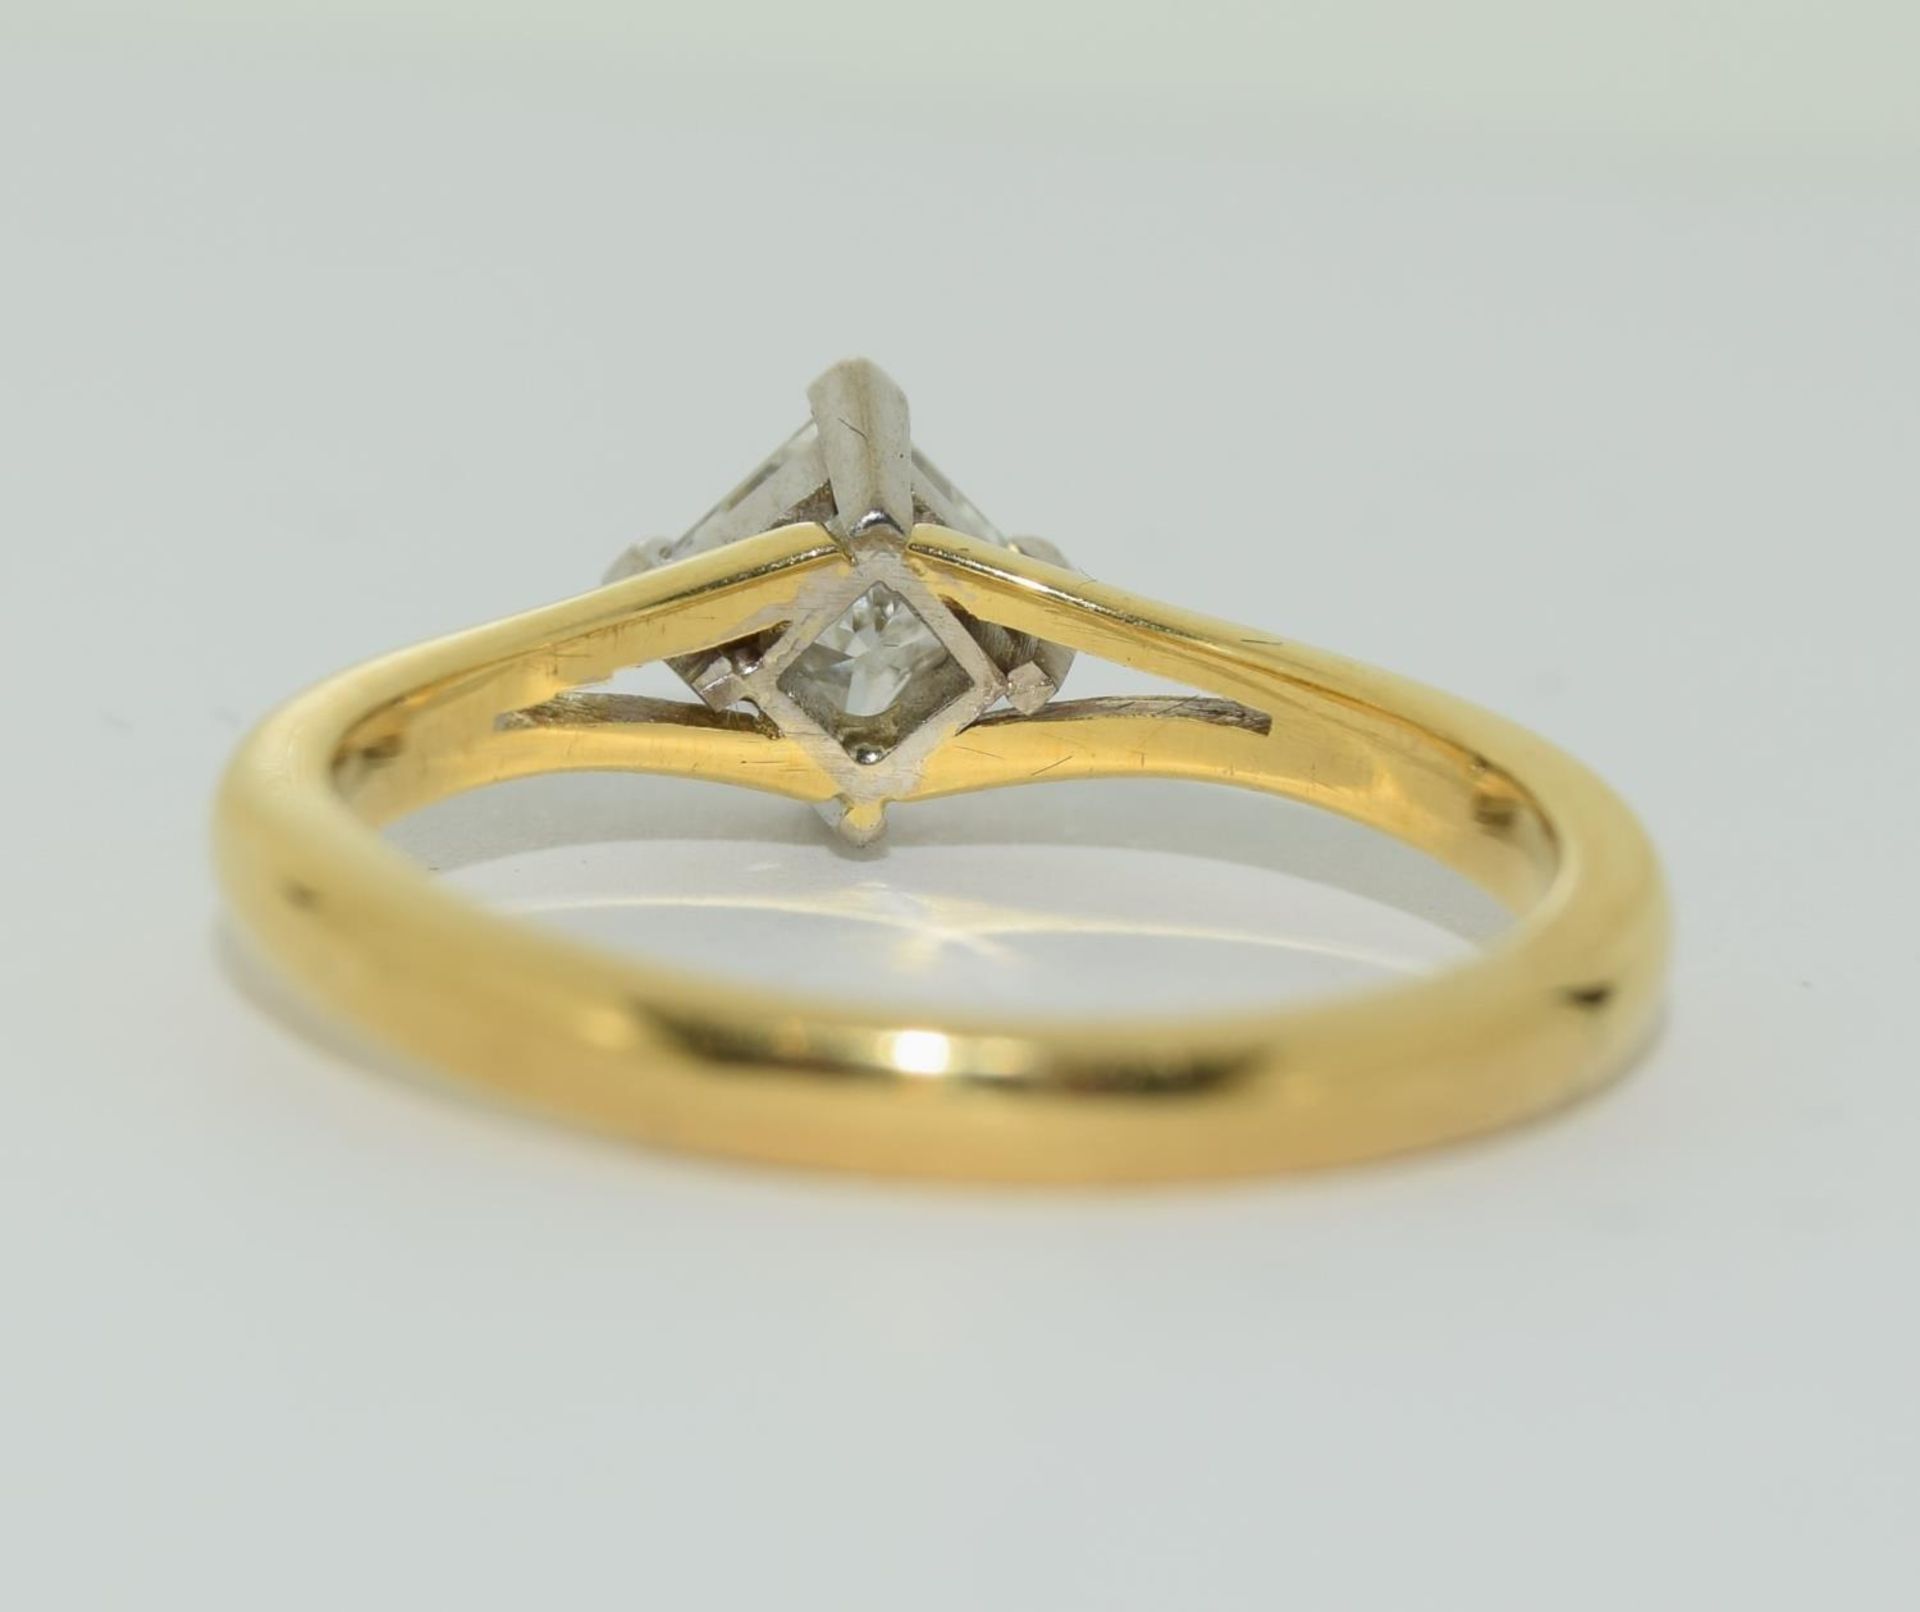 An 18ct yellow gold diamond (solitaire) approx weight - 3.1gm, diamond cut-princess diamond - Image 3 of 6